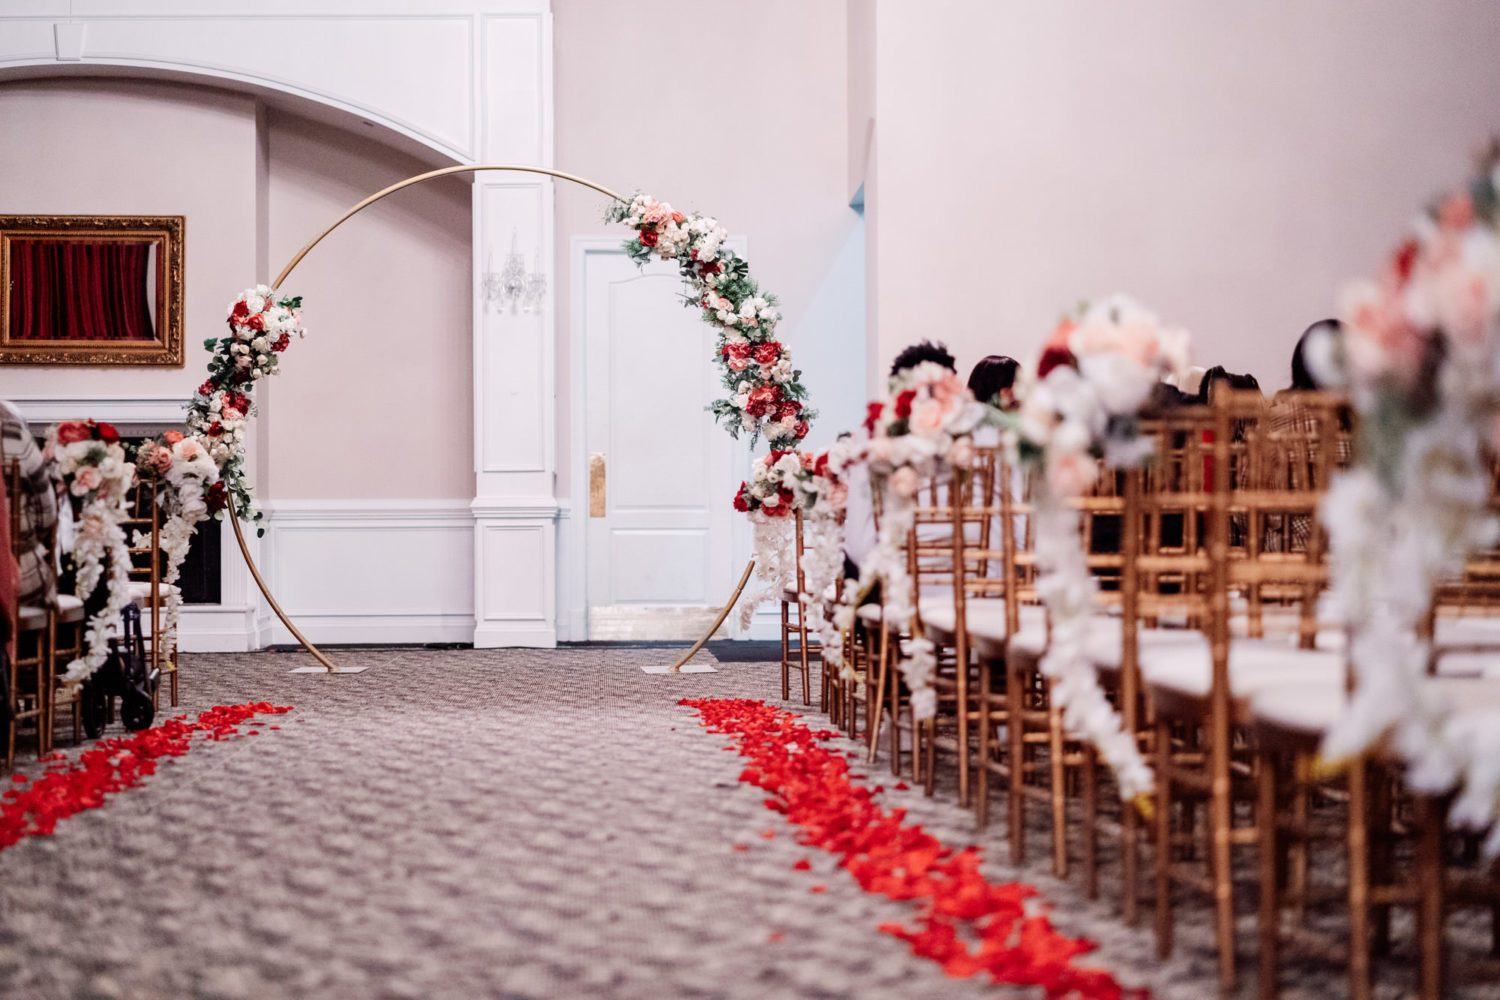 foxchase manor indoor wedding ceremony